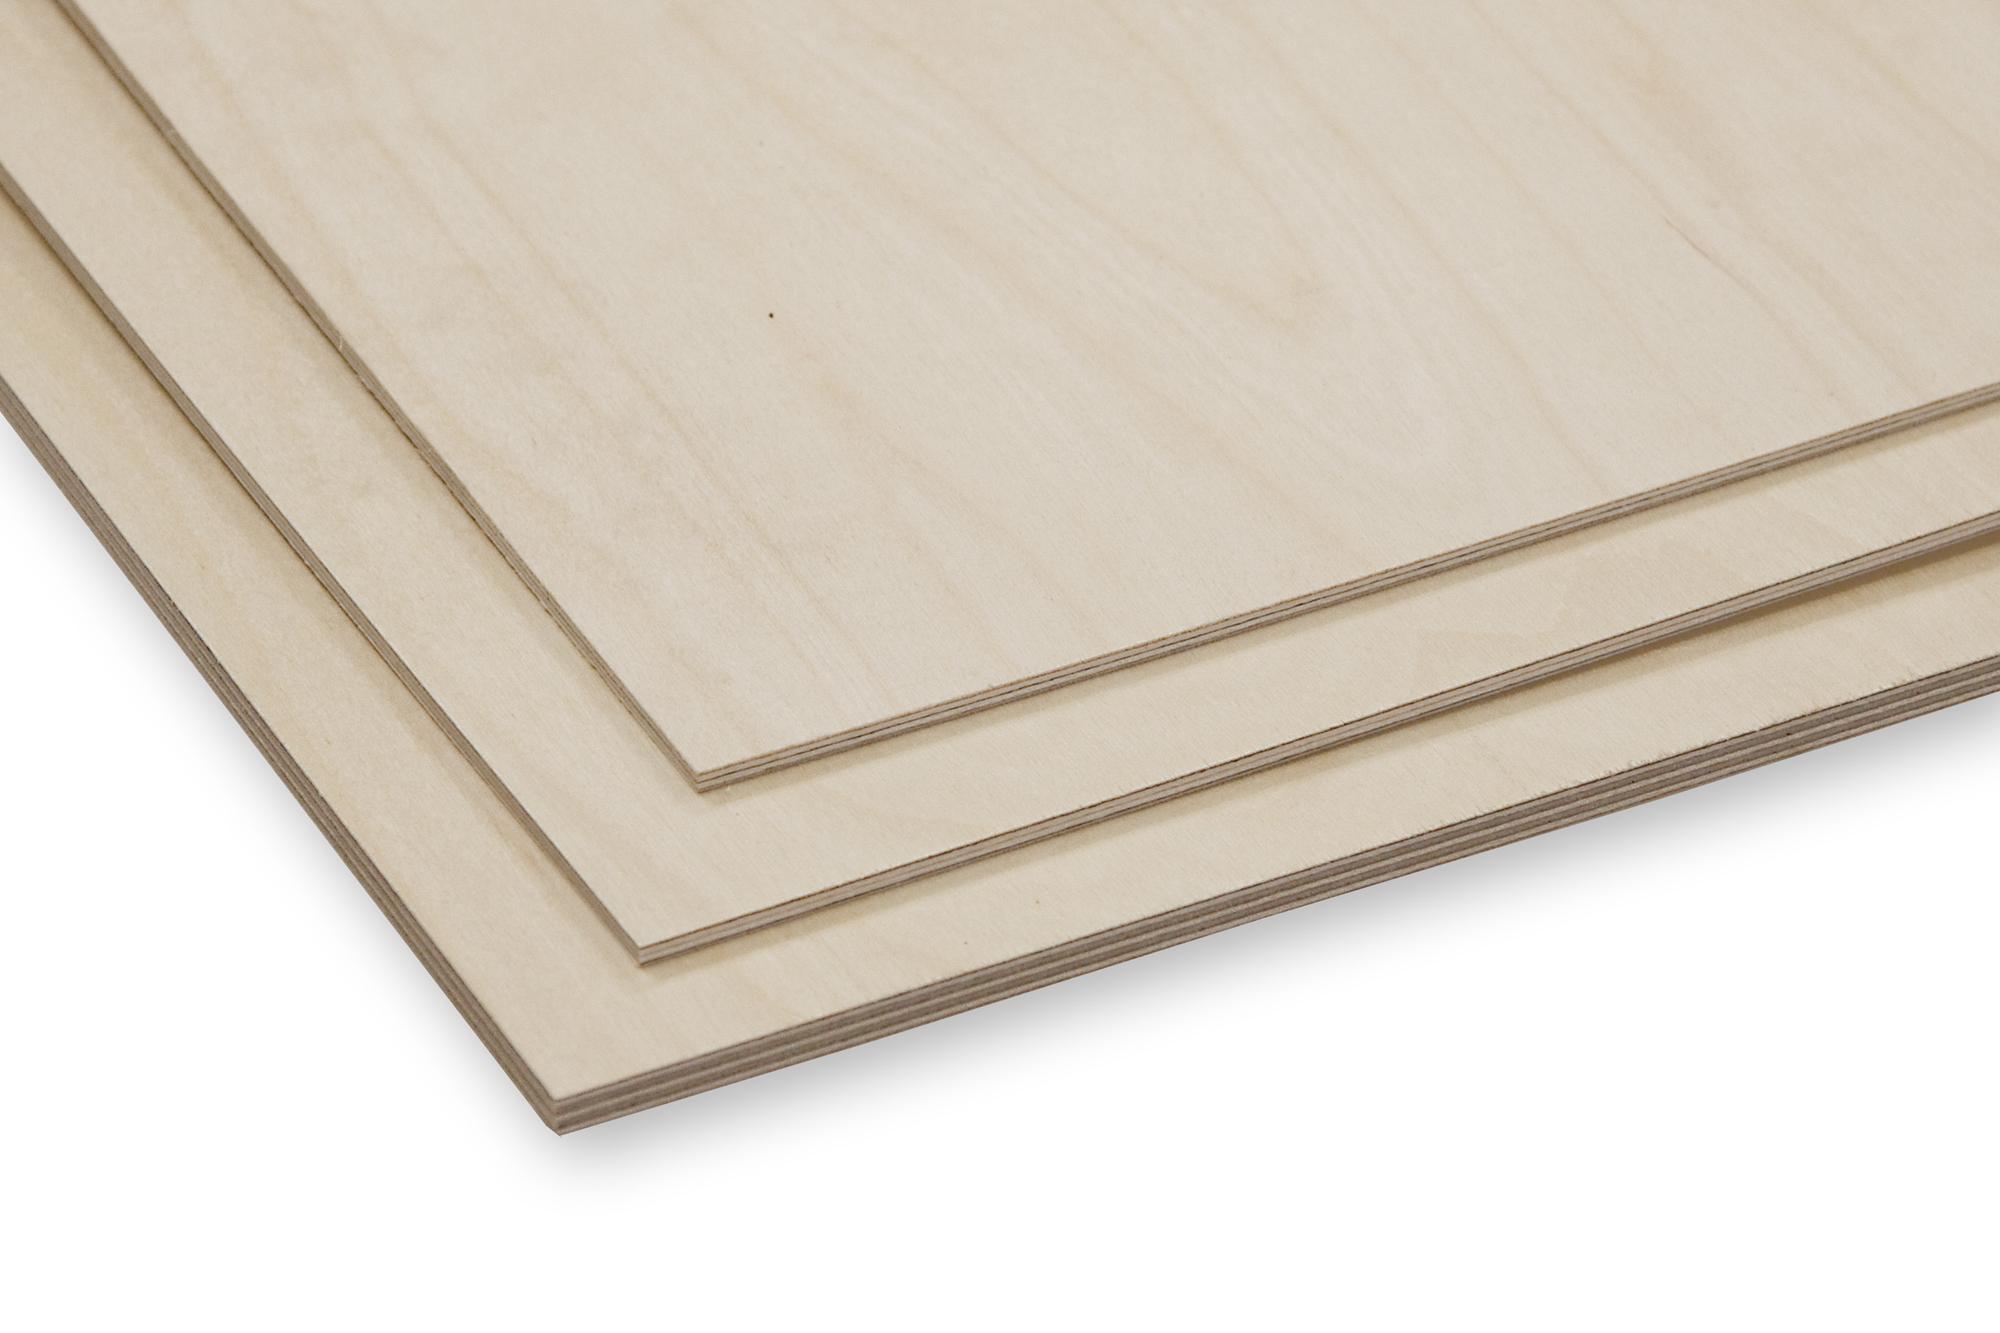 KoskiPlyEconomy is a thin plywood made of Finnish birch.